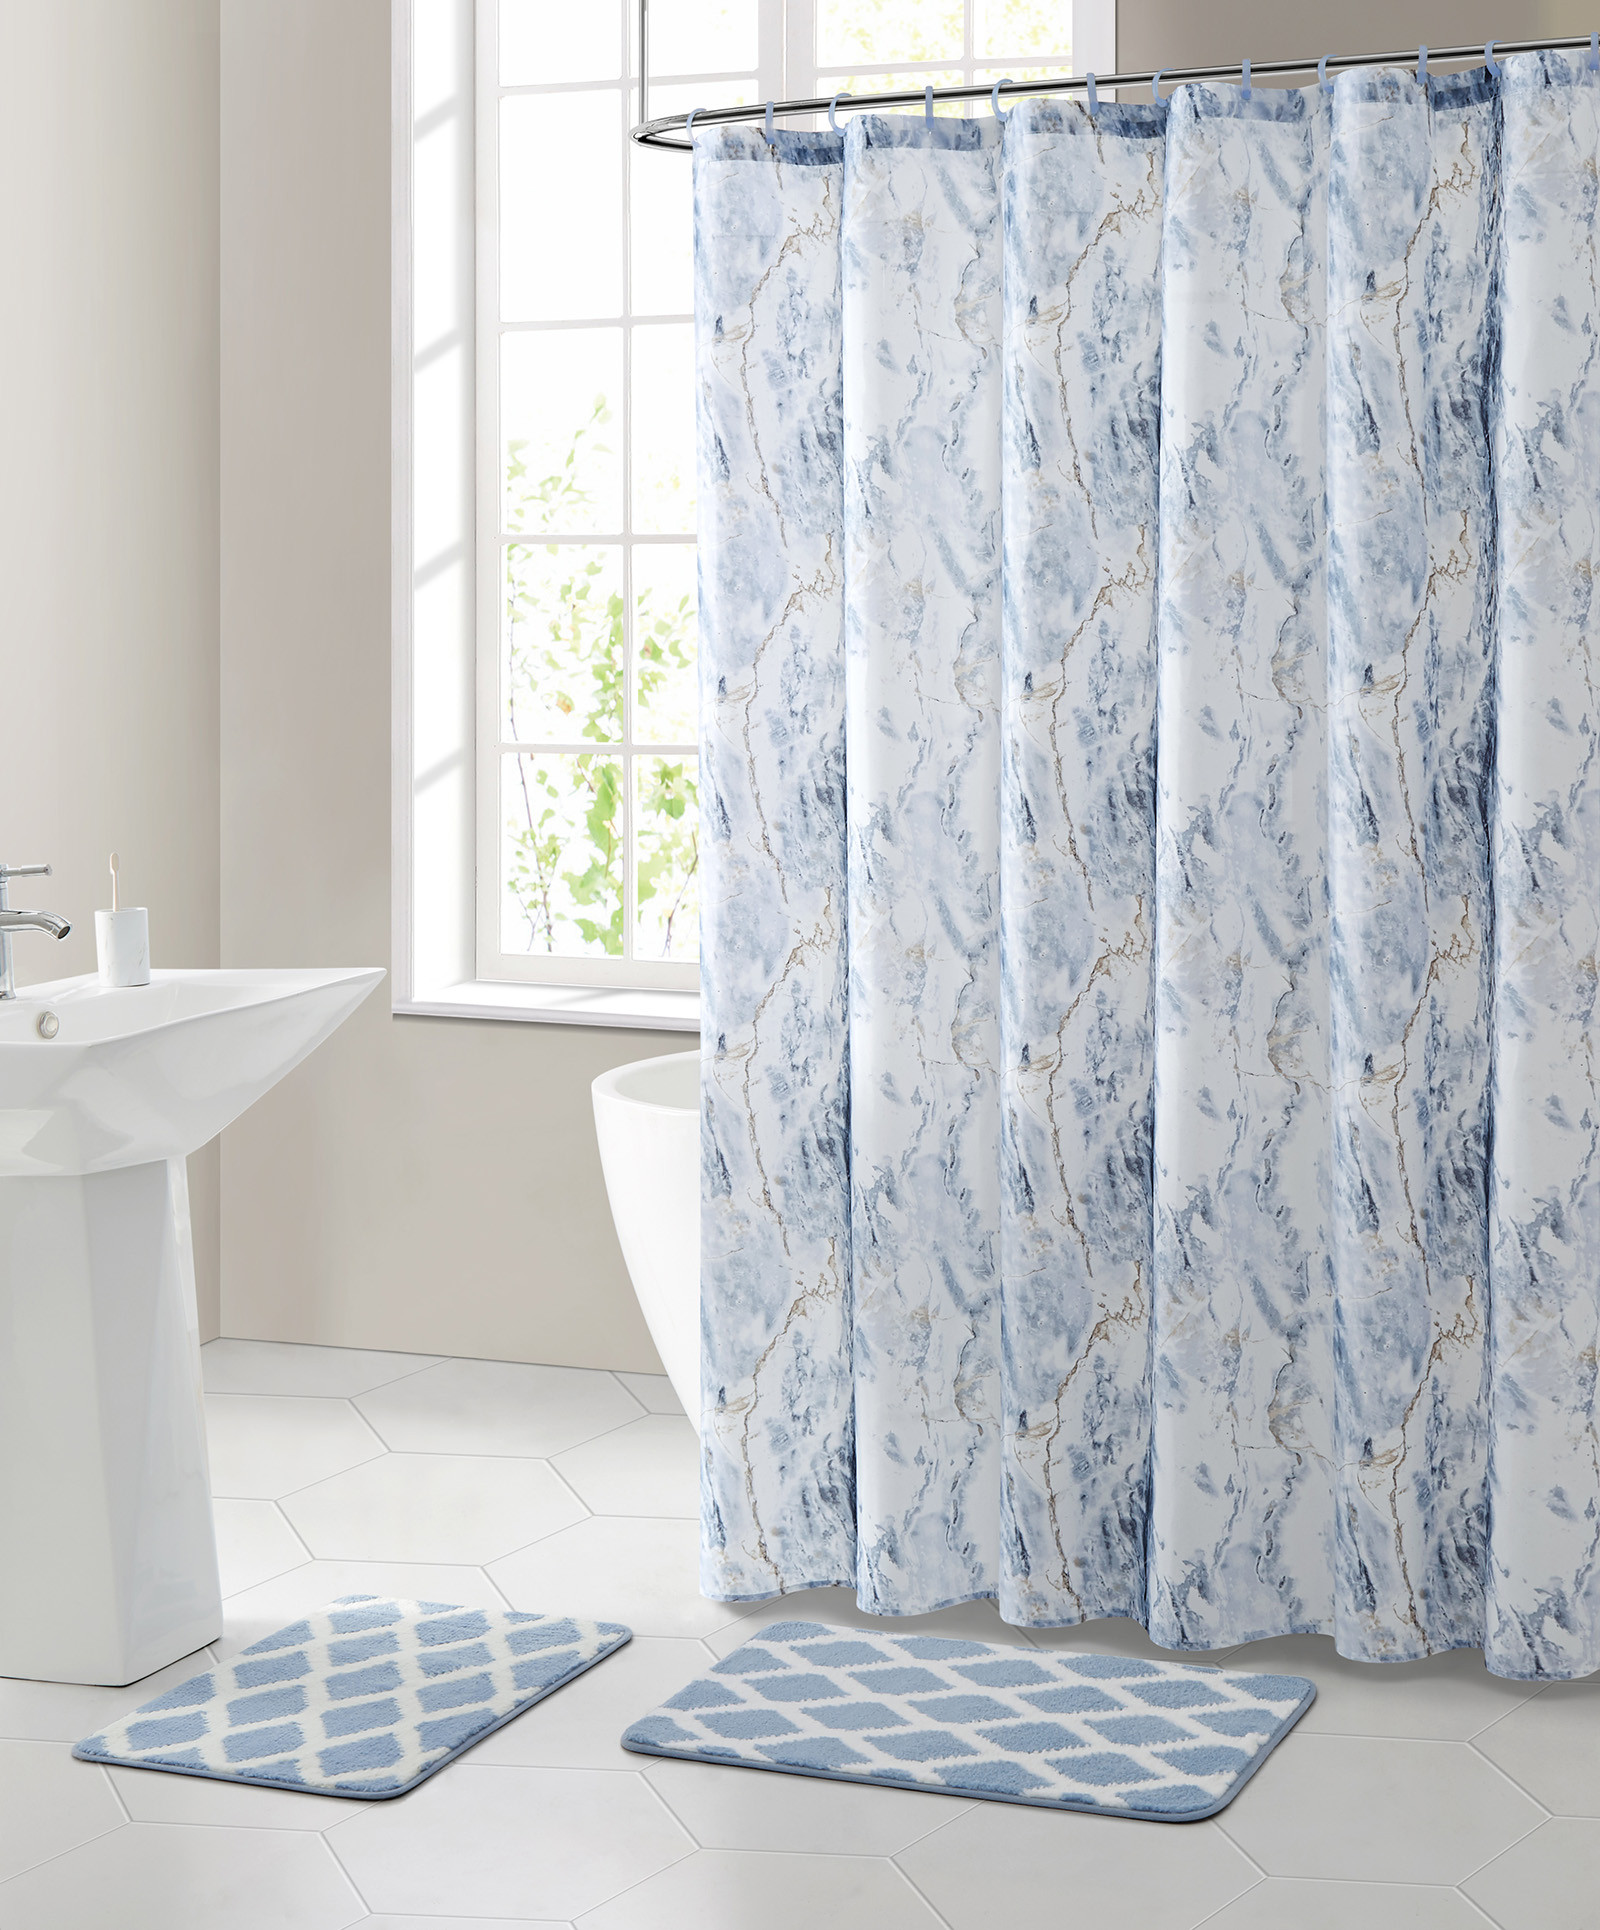 Walmart Bathroom Shower Curtain Sets
 Mainstays Marble 15 Piece Shower Curtain Bath Set